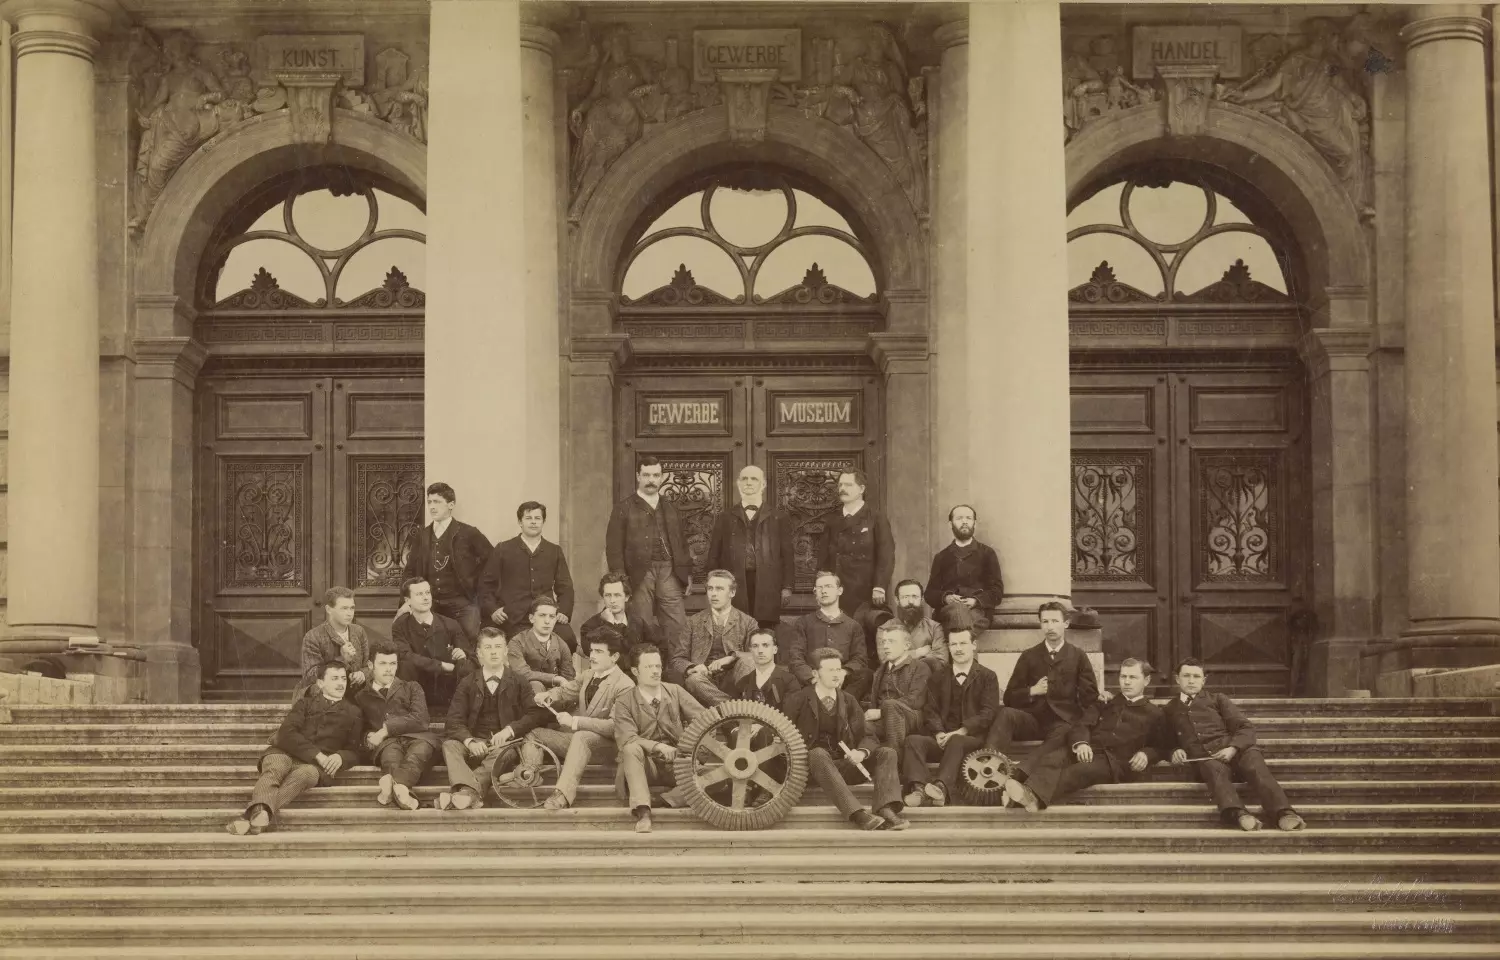 Graduating class, Mechanical Engineering 1892